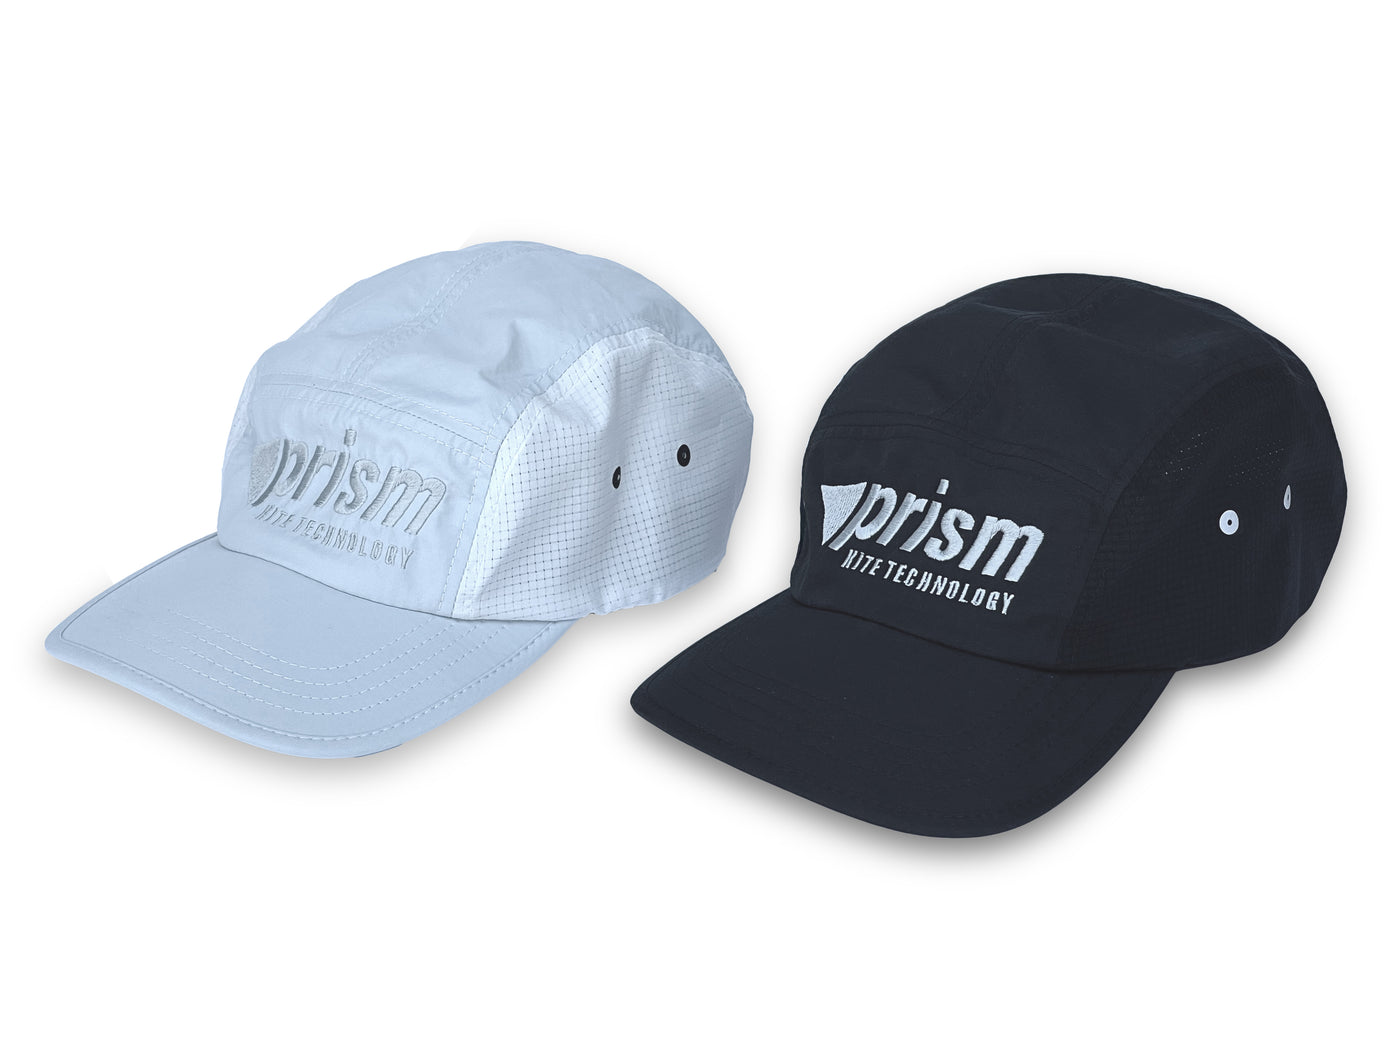 Prism blue/grey and black summer hats